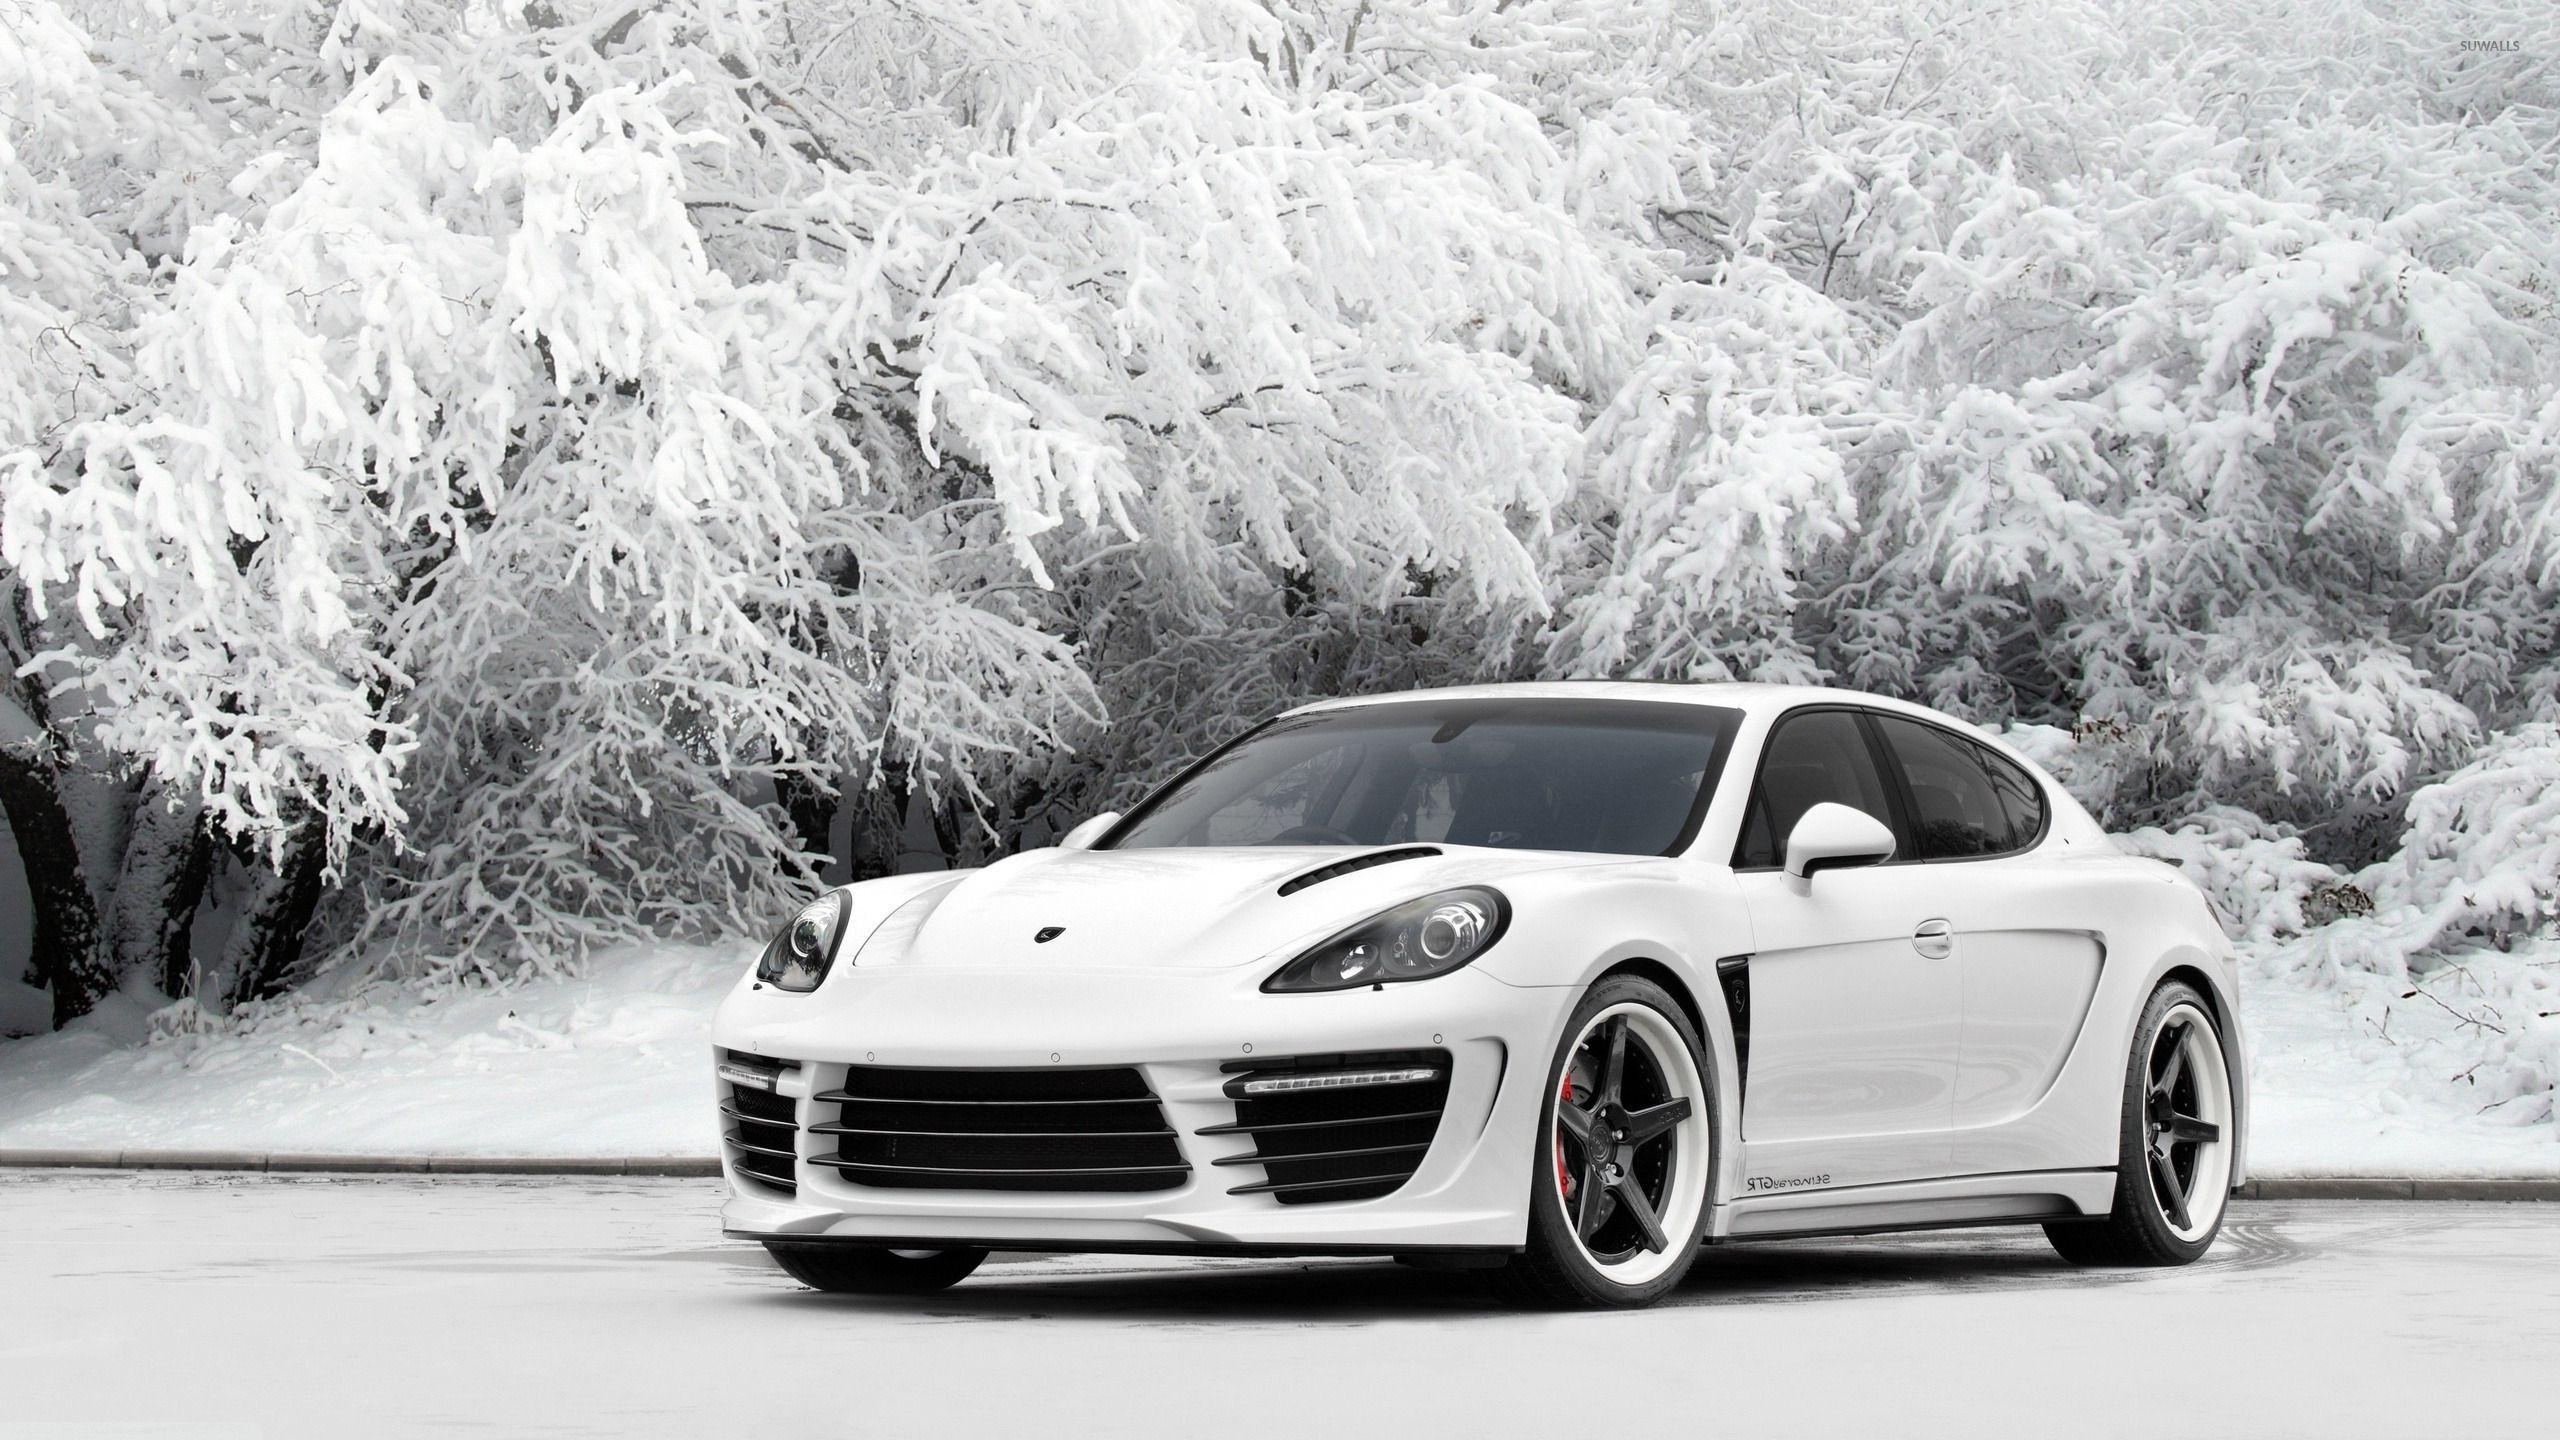 Porsche Panamera, Captivating wallpapers, Timeless beauty, Automotive artistry, 2560x1440 HD Desktop